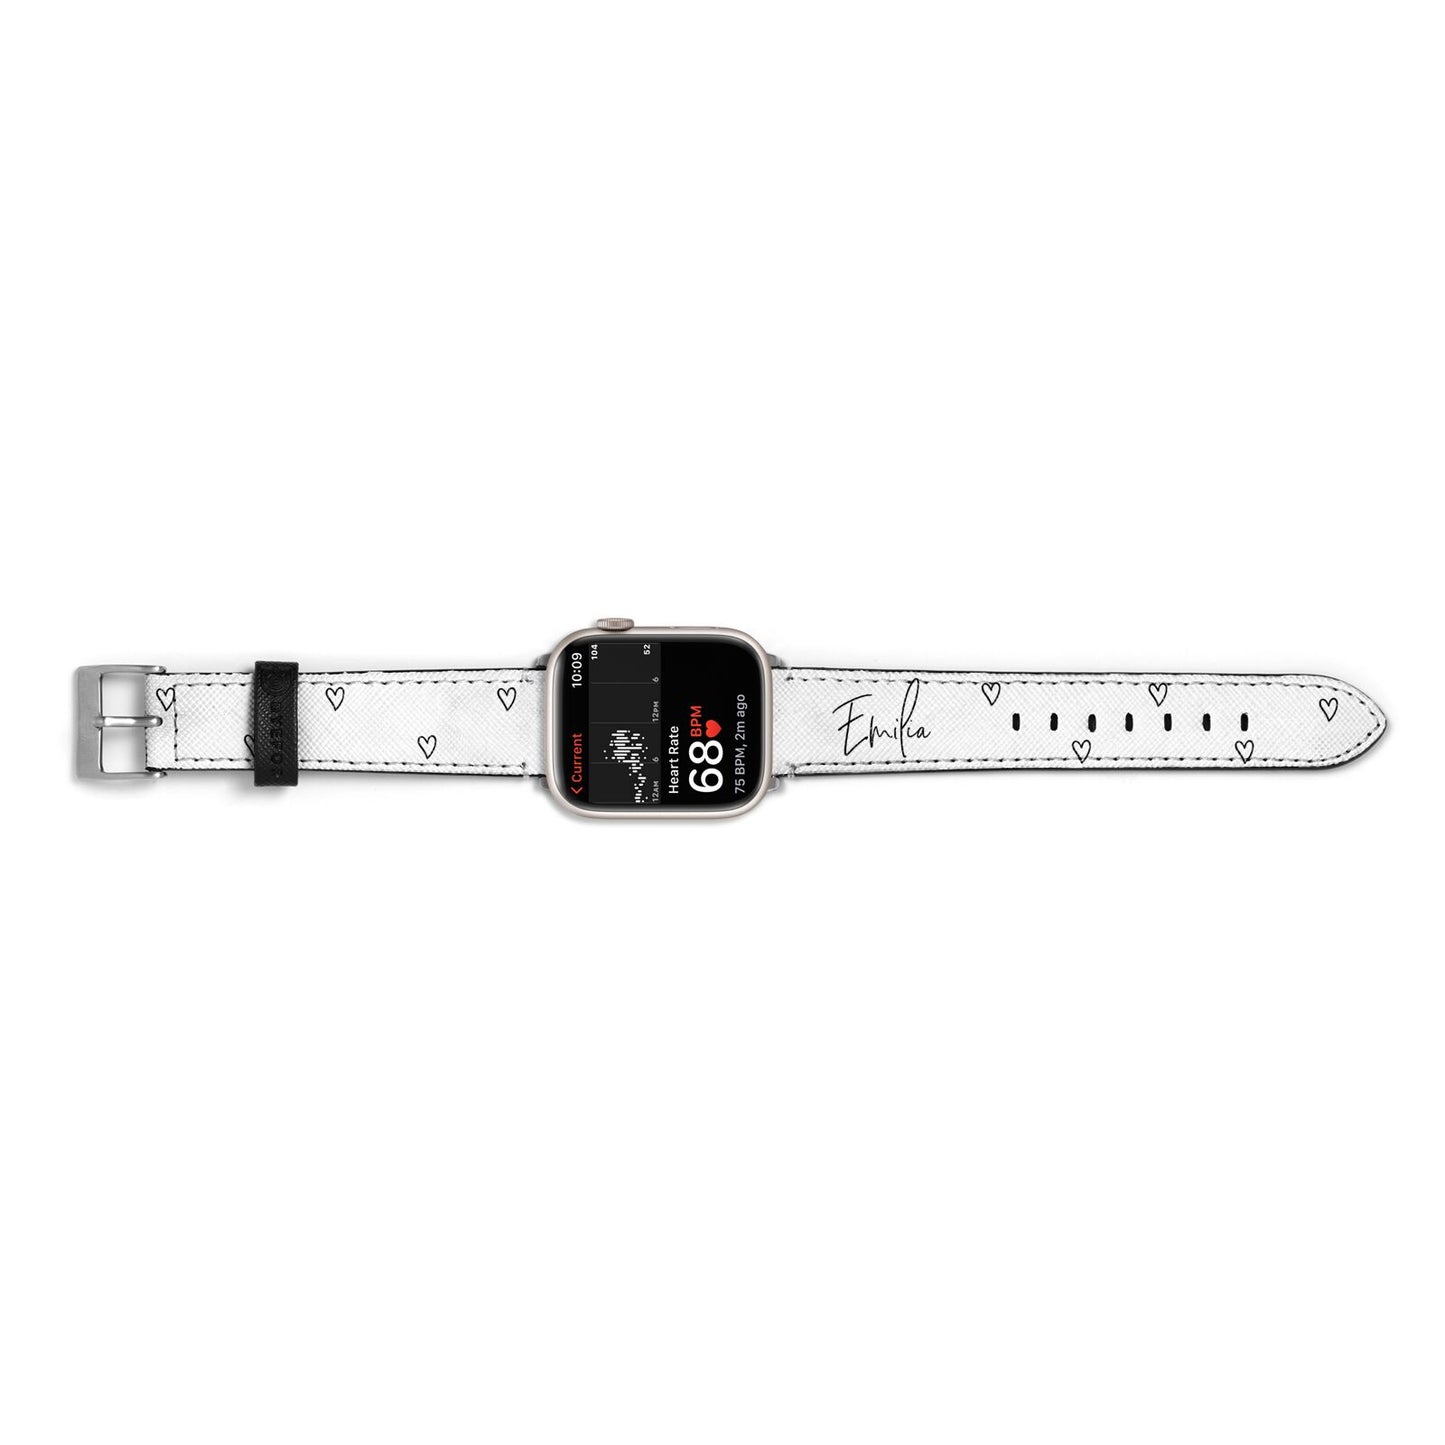 Transparent Black Handwritten Name Apple Watch Strap Size 38mm Landscape Image Silver Hardware